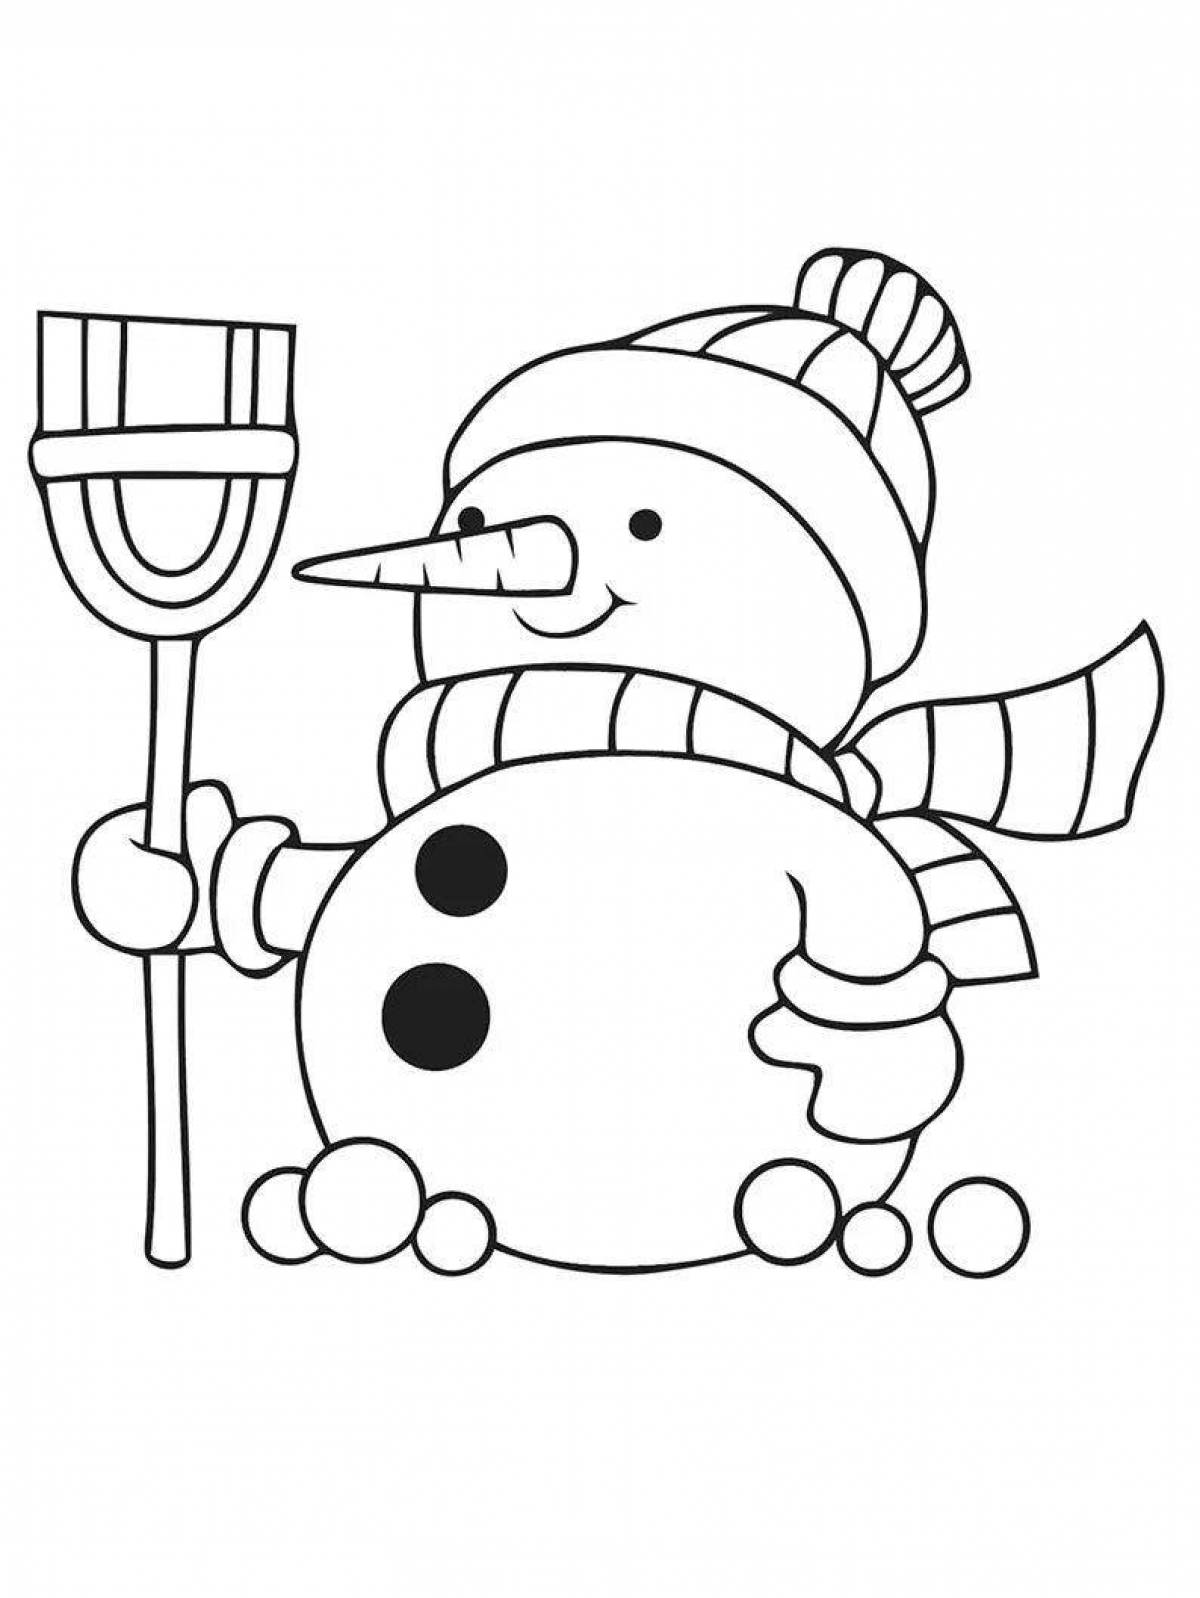 Fabulous Christmas snowman coloring page